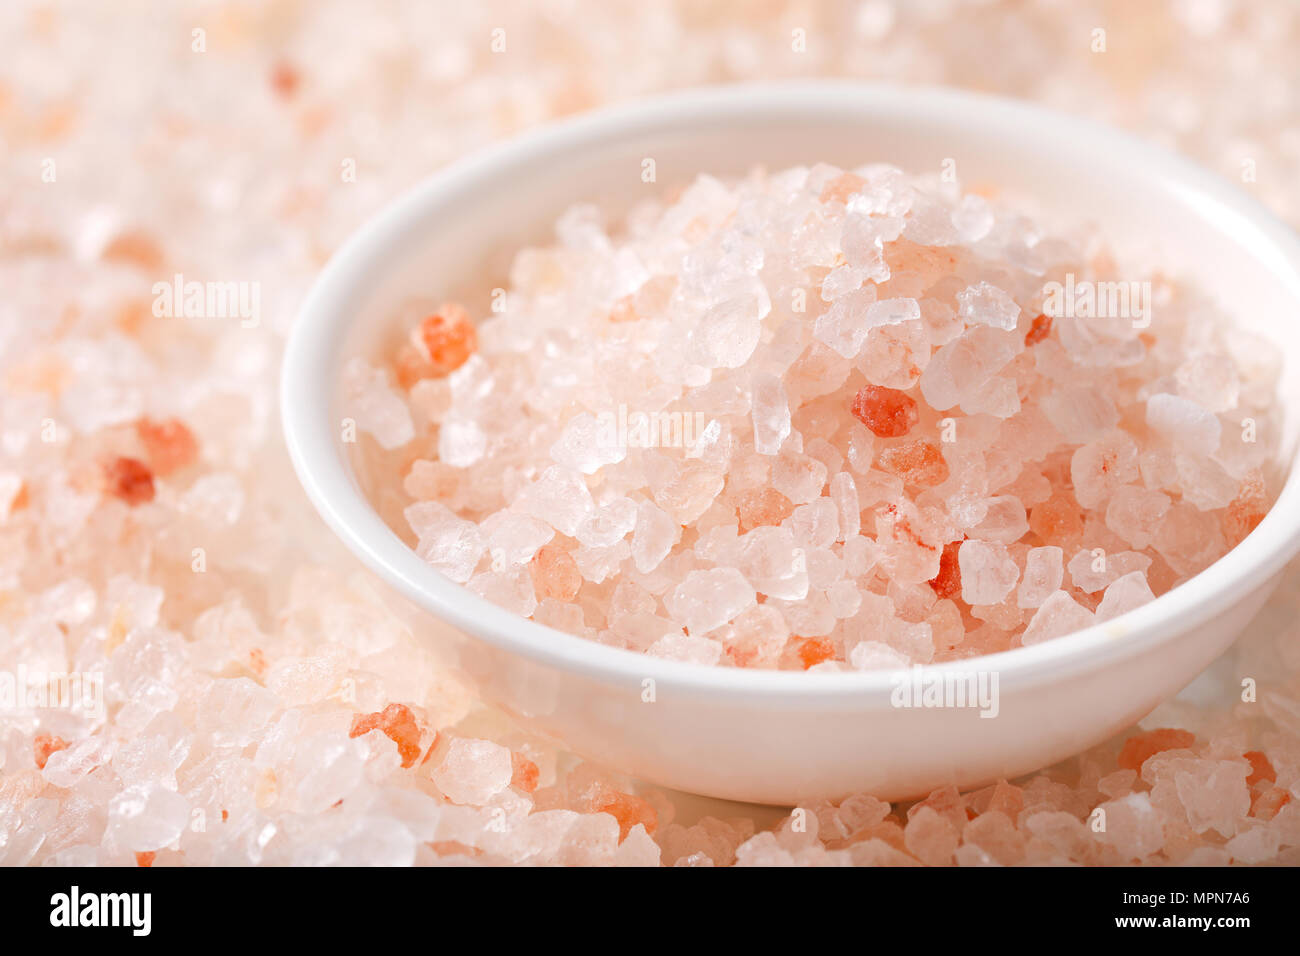 bowl of coarse grained salt on coarse grained salt background - detail Stock Photo